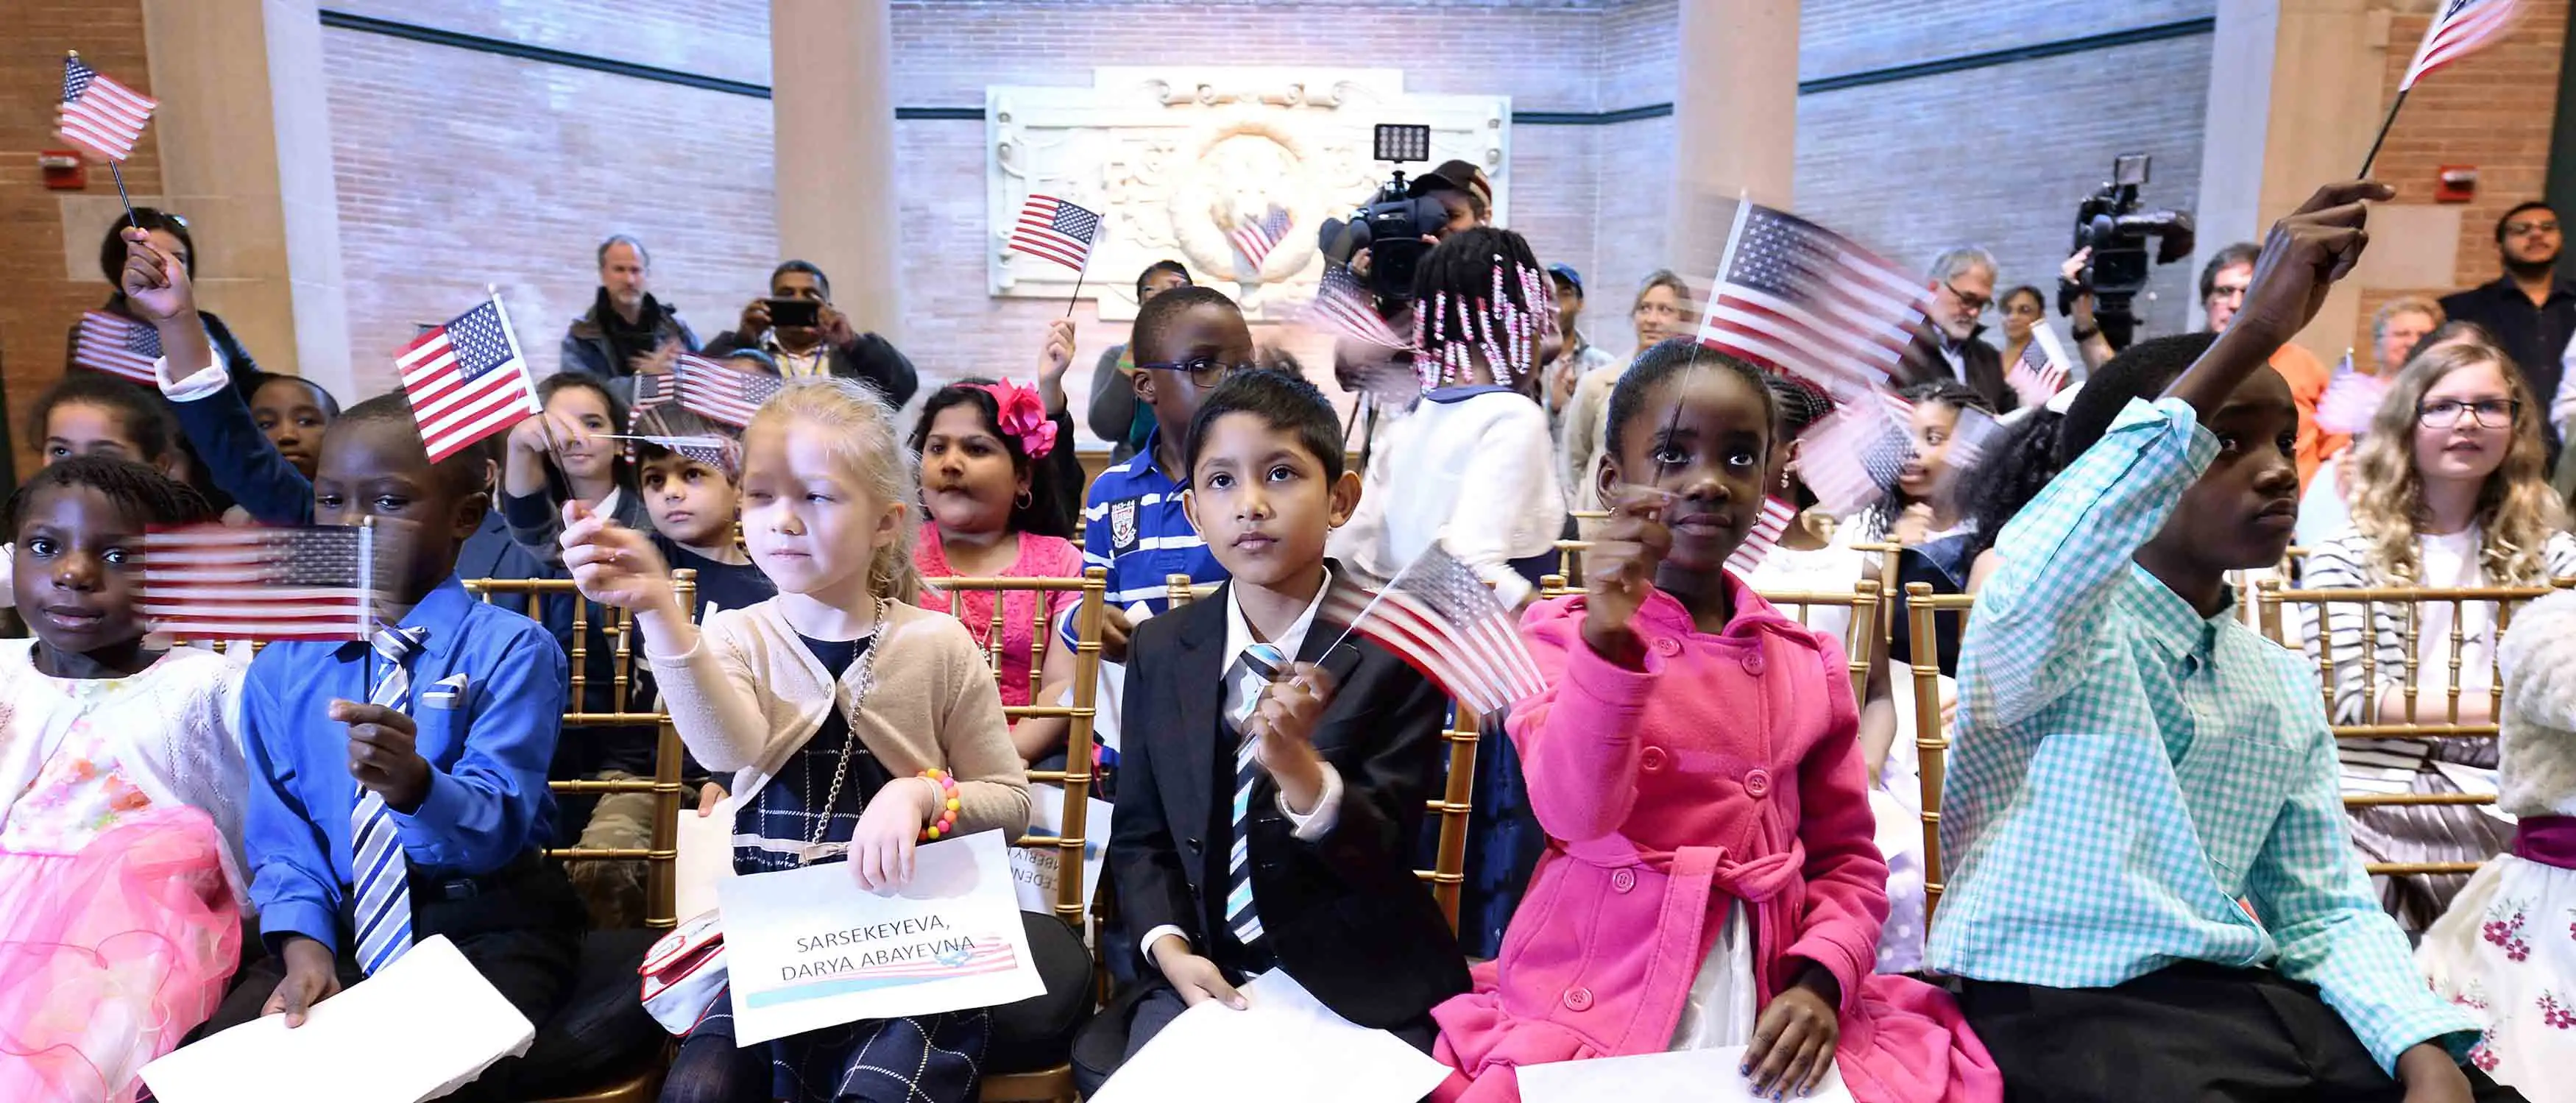 Children waving United States flags.